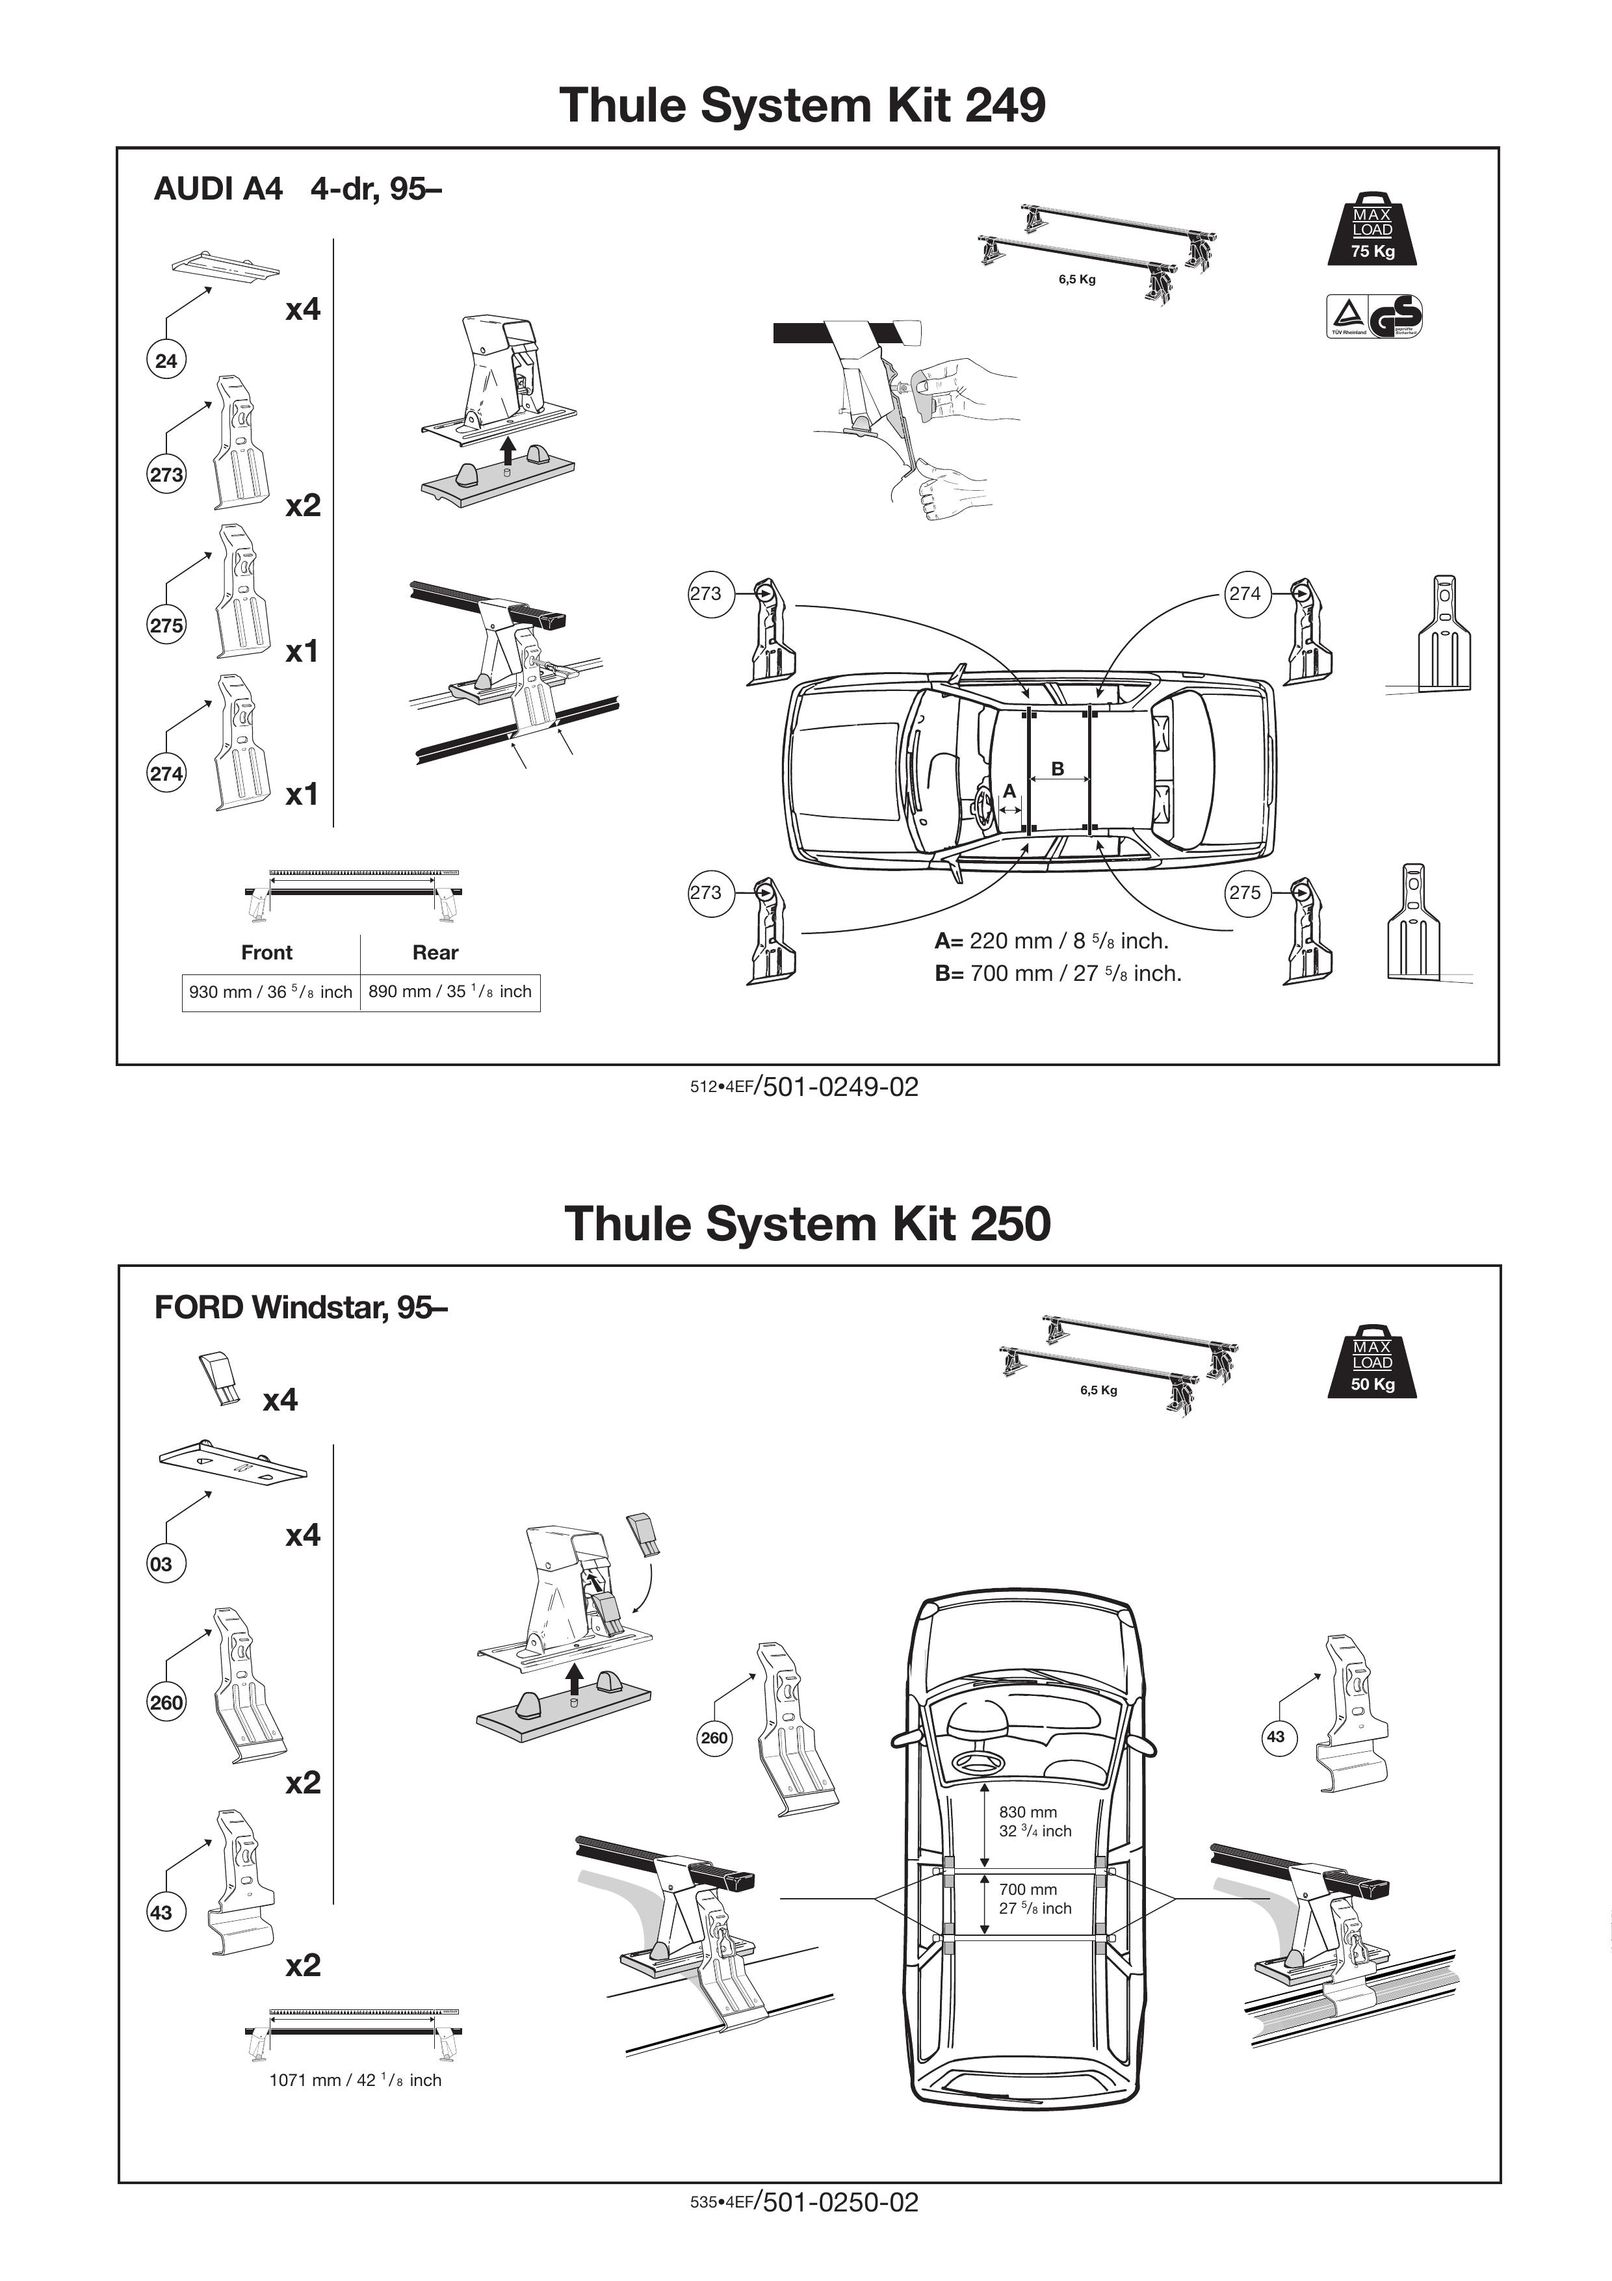 Audi 5354EF/501-0250-02 Bike Rack User Manual